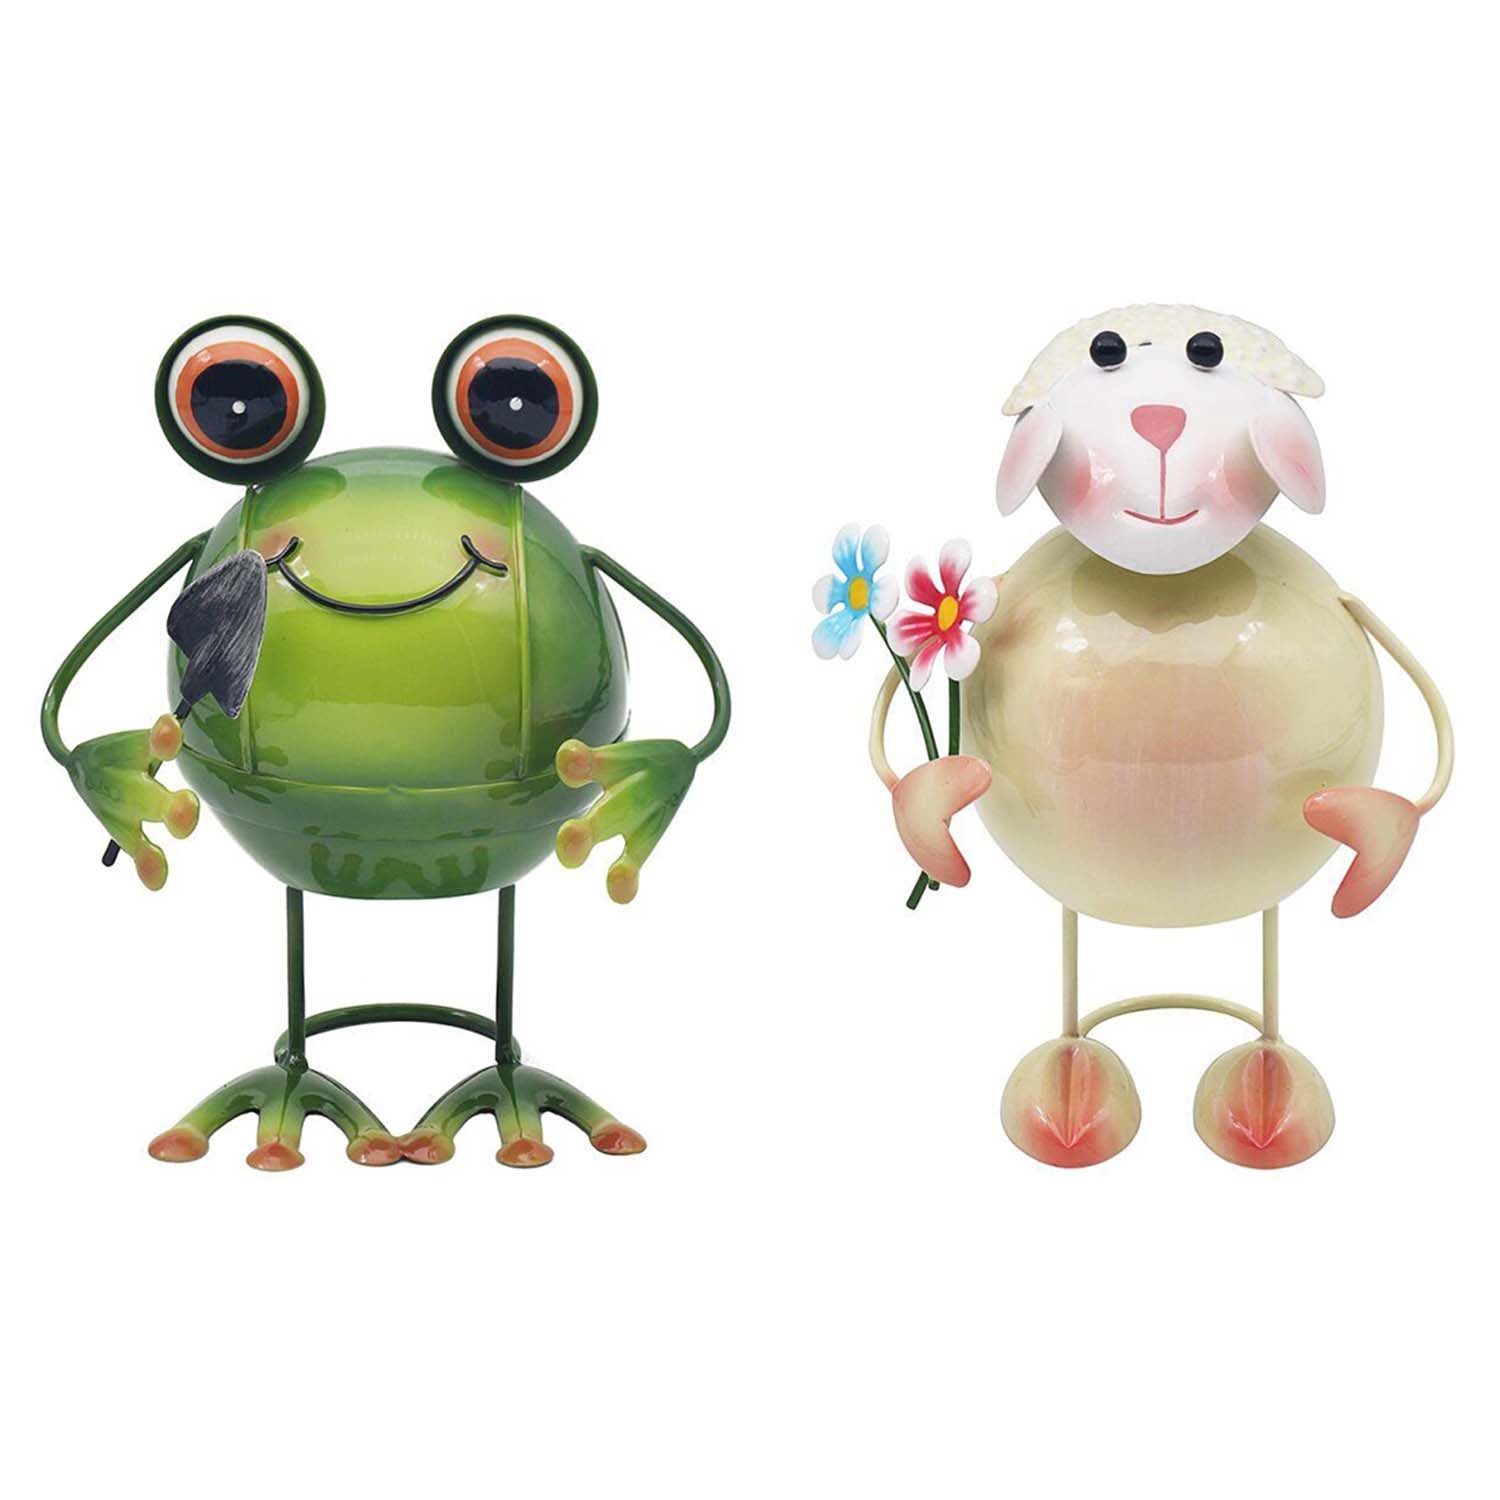 Bright Eyes Small Frog & Sheep Metal Garden Ornaments Set